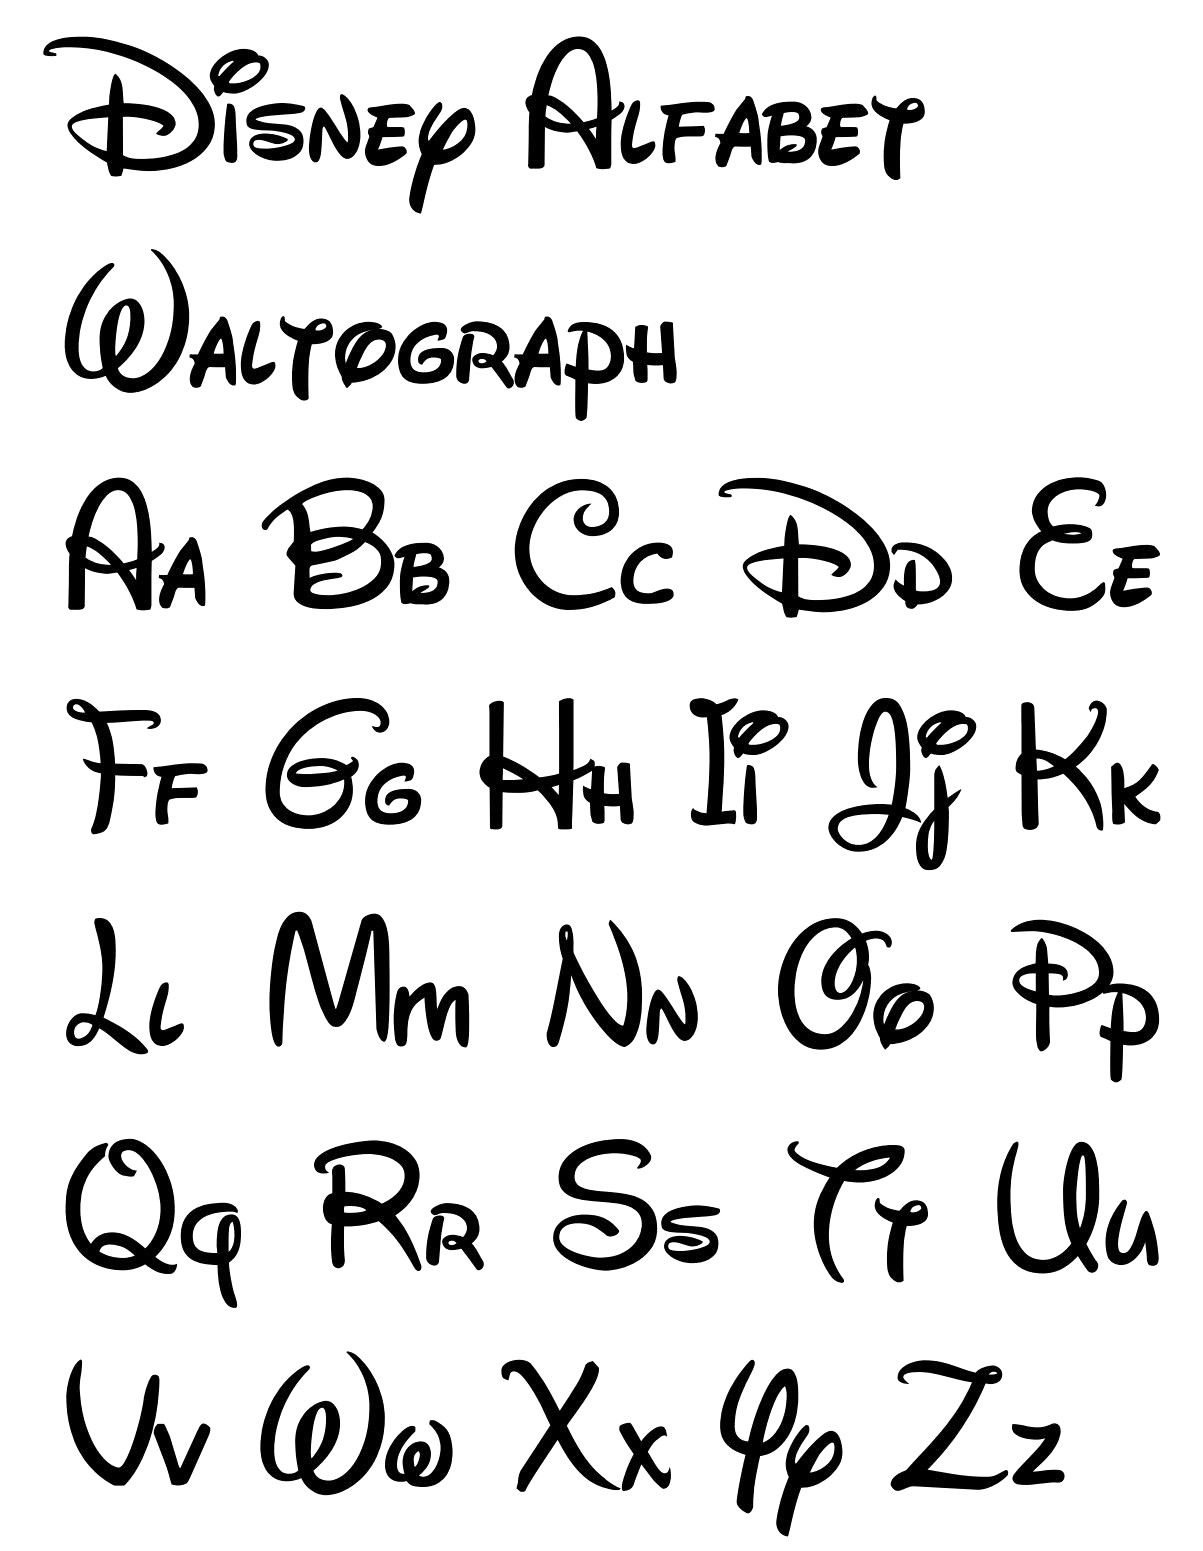 Free Printable Disney Letter Stencils | Disney | Pinterest - Free Printable Calligraphy Letter Stencils